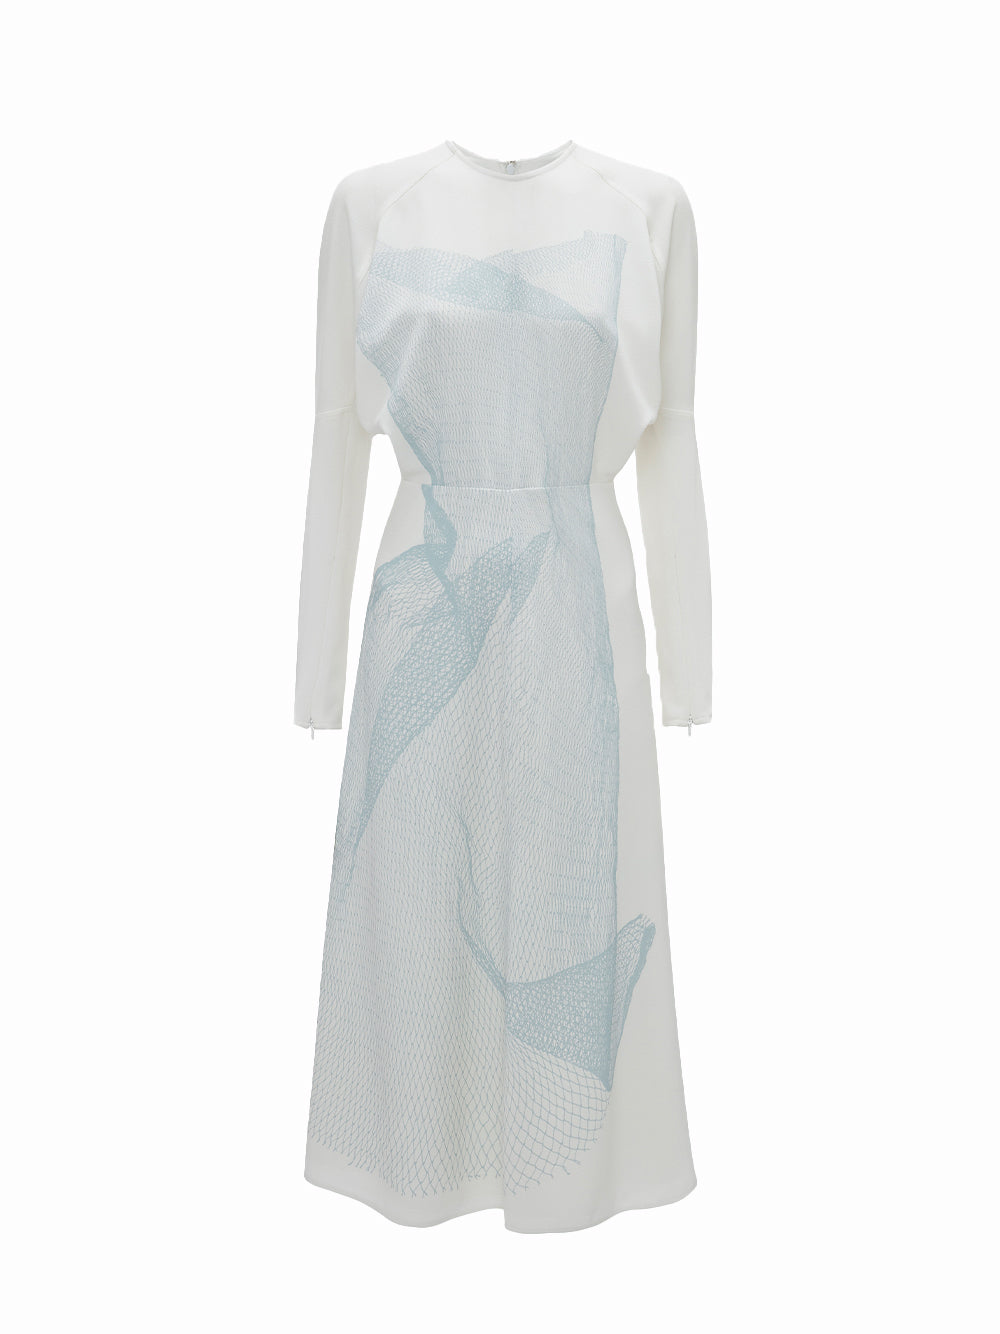 Long Sleeve Dolman Midi Dress Contorted Net (White/Blue)